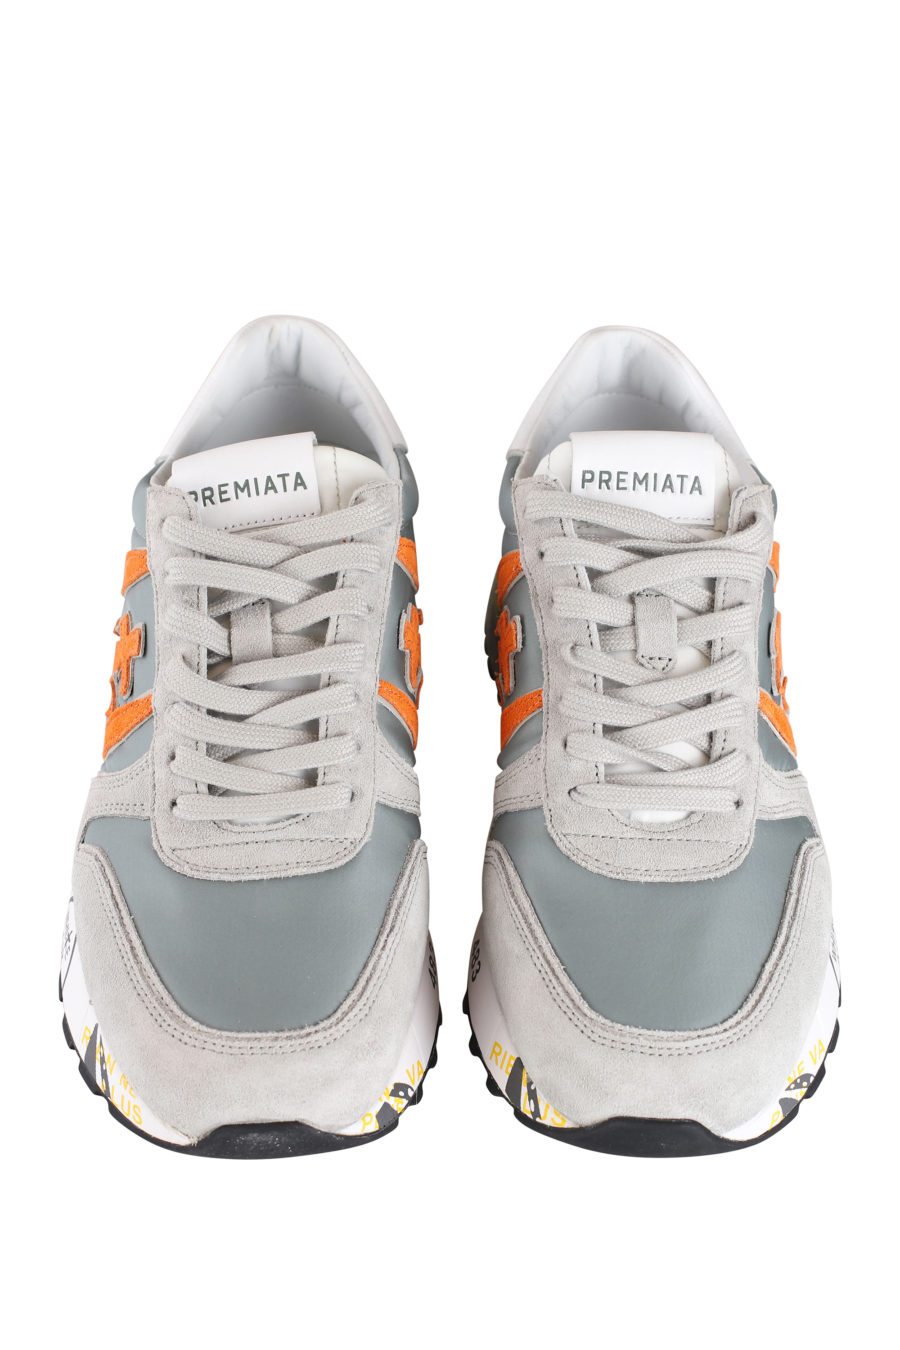 Zapatillas grises con detalles naranja "Lander" - IMG 9633